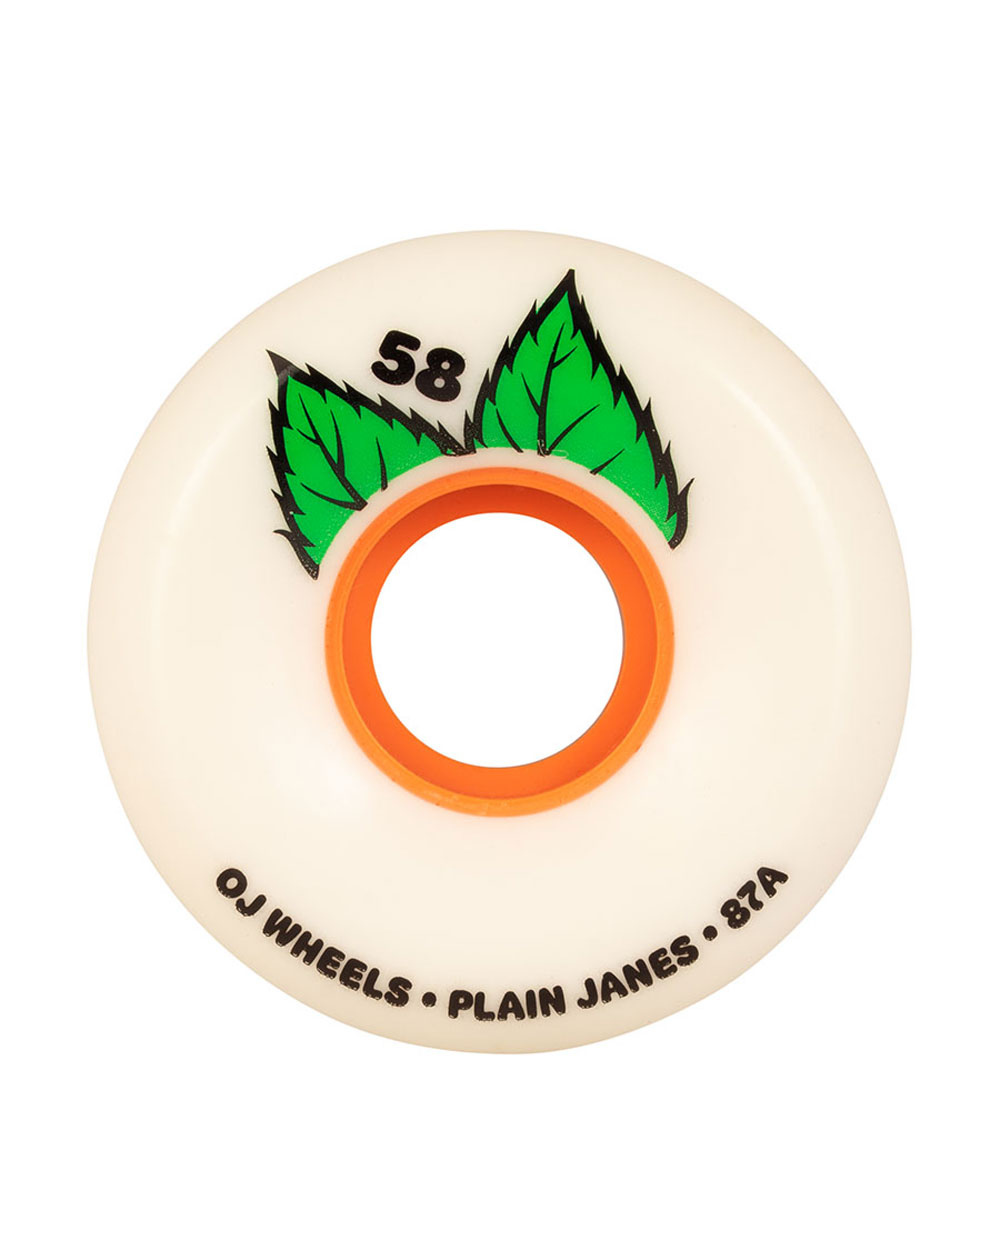 OJ Plain Jane Keyframe 58mm 87A Skateboard Wheels pack of 4